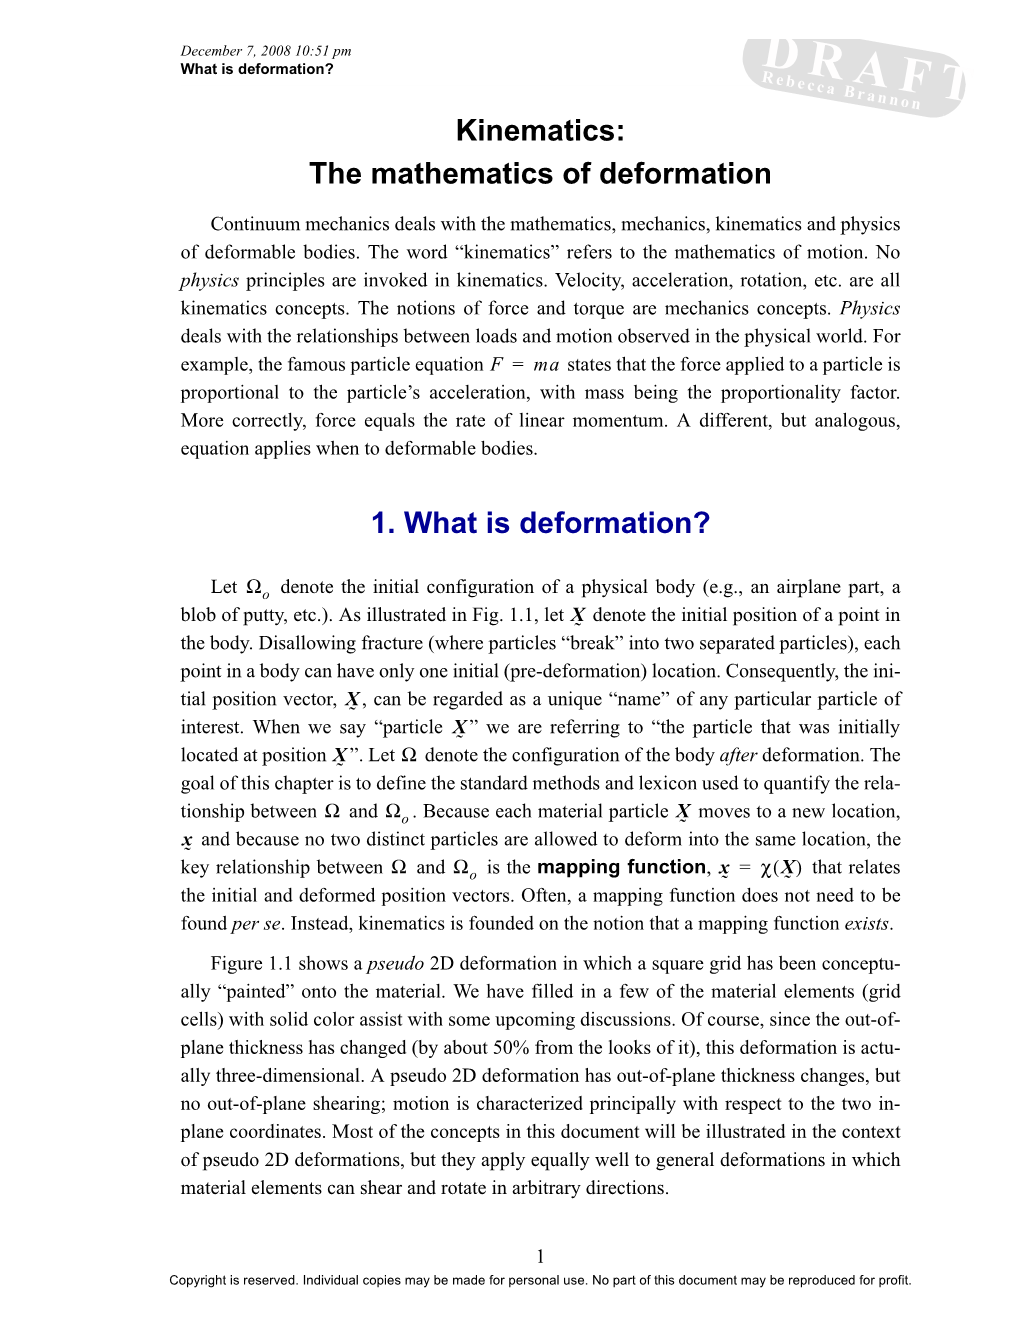 Kinematics: the Mathematics of Deformation